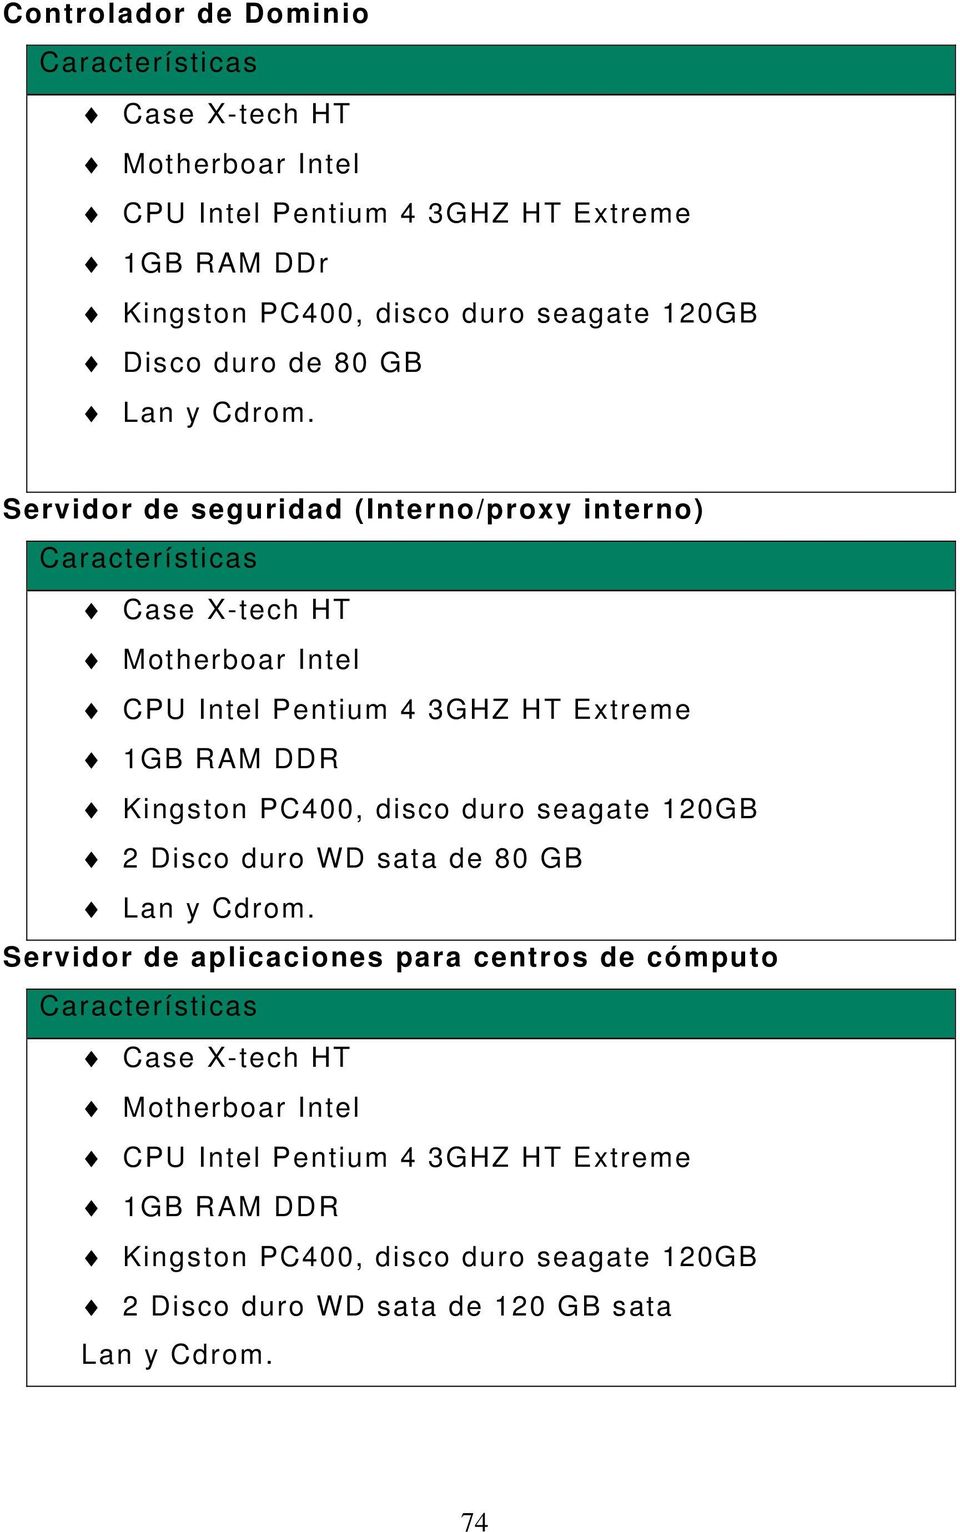 Servidor de seguridad (Interno/proxy interno) Características Case X-tech HT Motherboar Intel CPU Intel Pentium 4 3GHZ HT Extreme 1GB RAM DDR Kingston PC400, disco